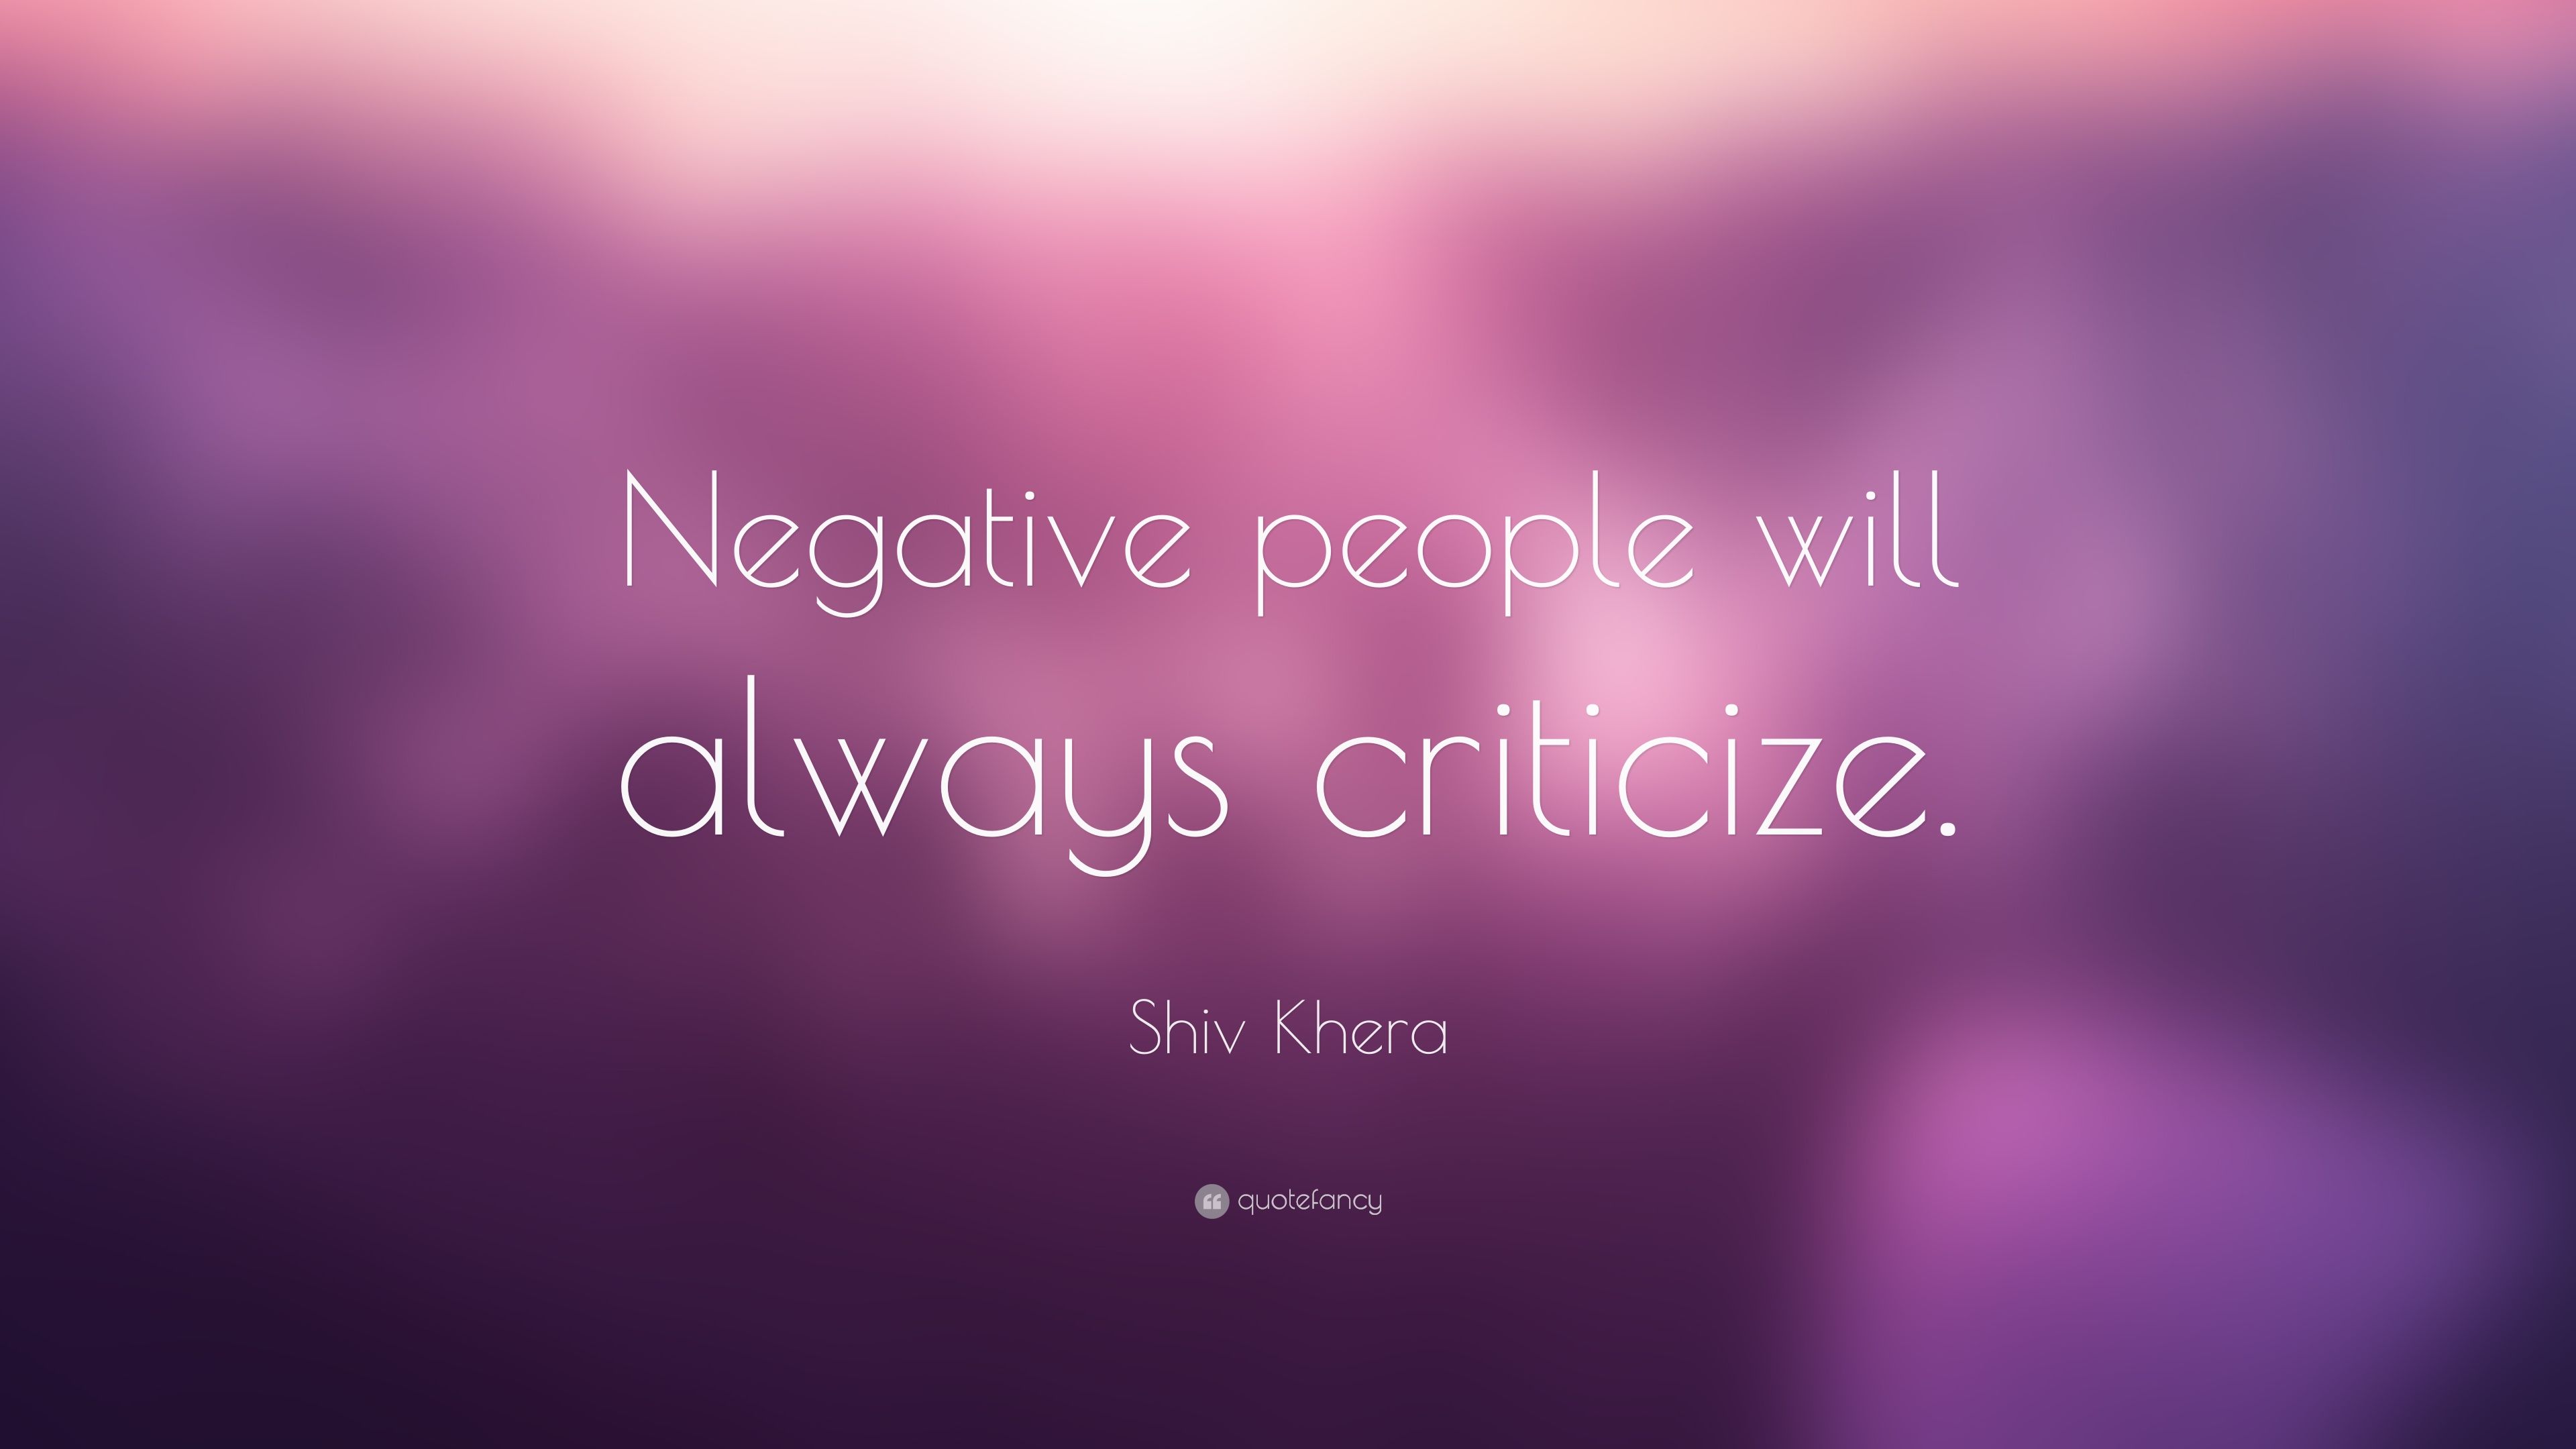 Shiv Khera Quote: “Negative people will always criticize.”